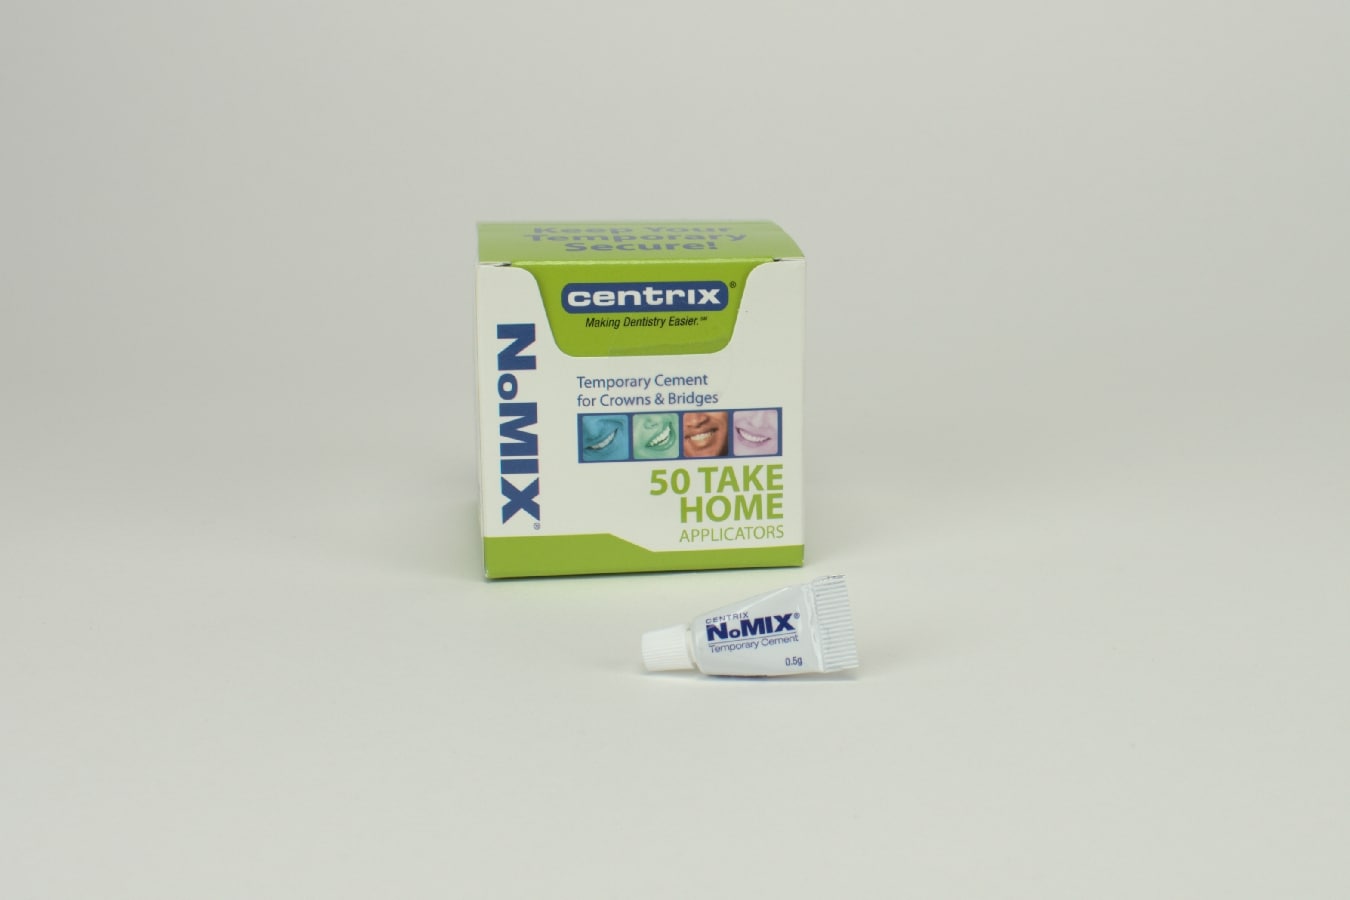 NoMIX Take-Home Kit uni-dose